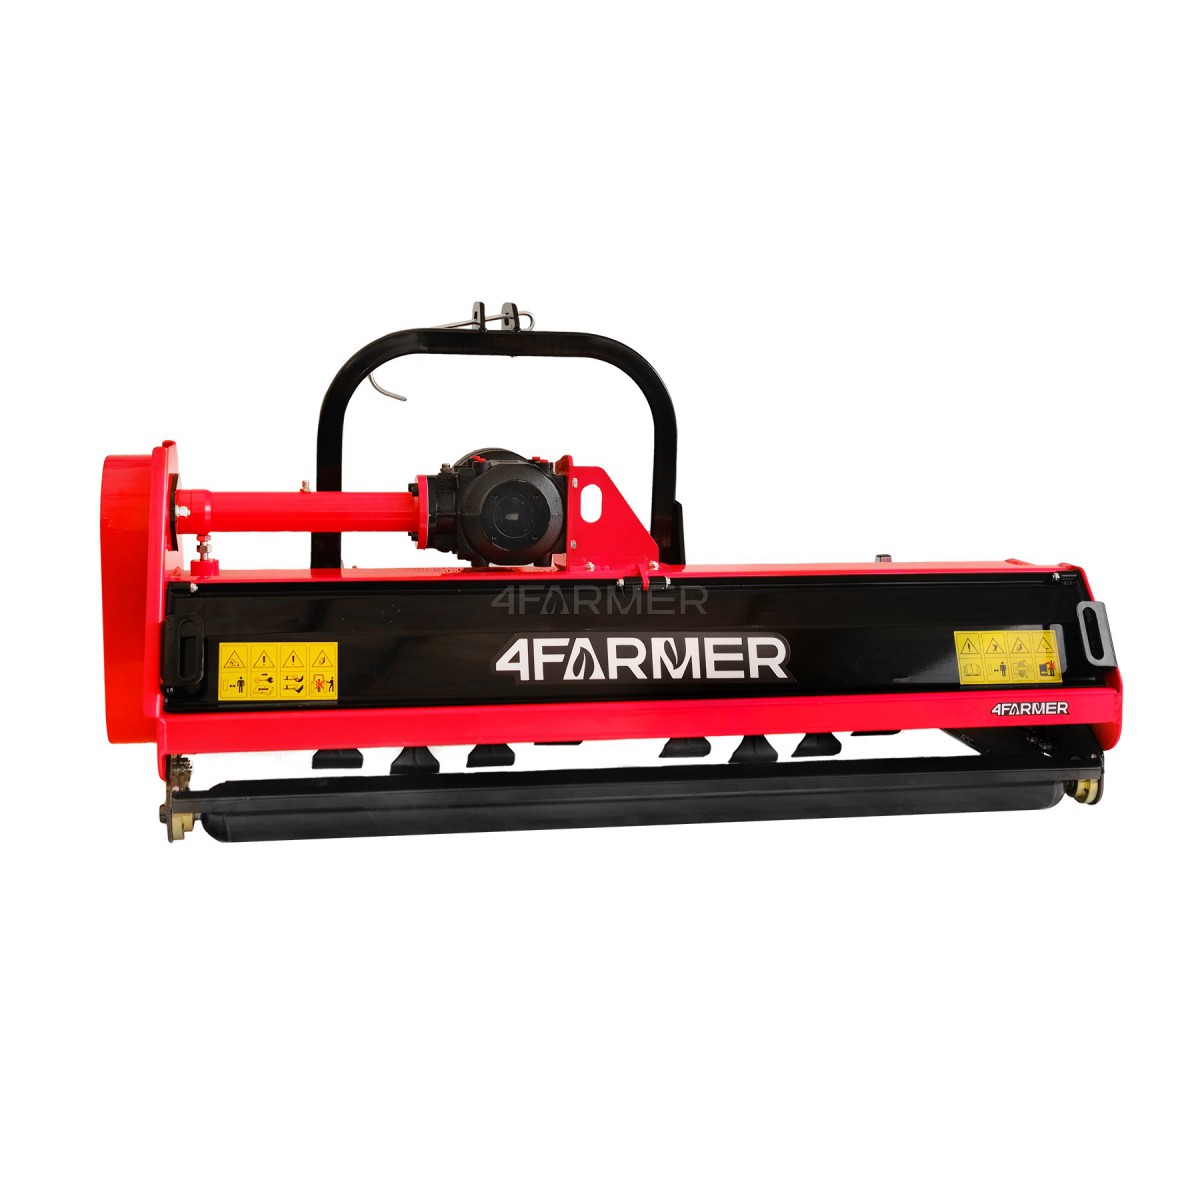 Flail mower EFGC 145D 4FARMER - red